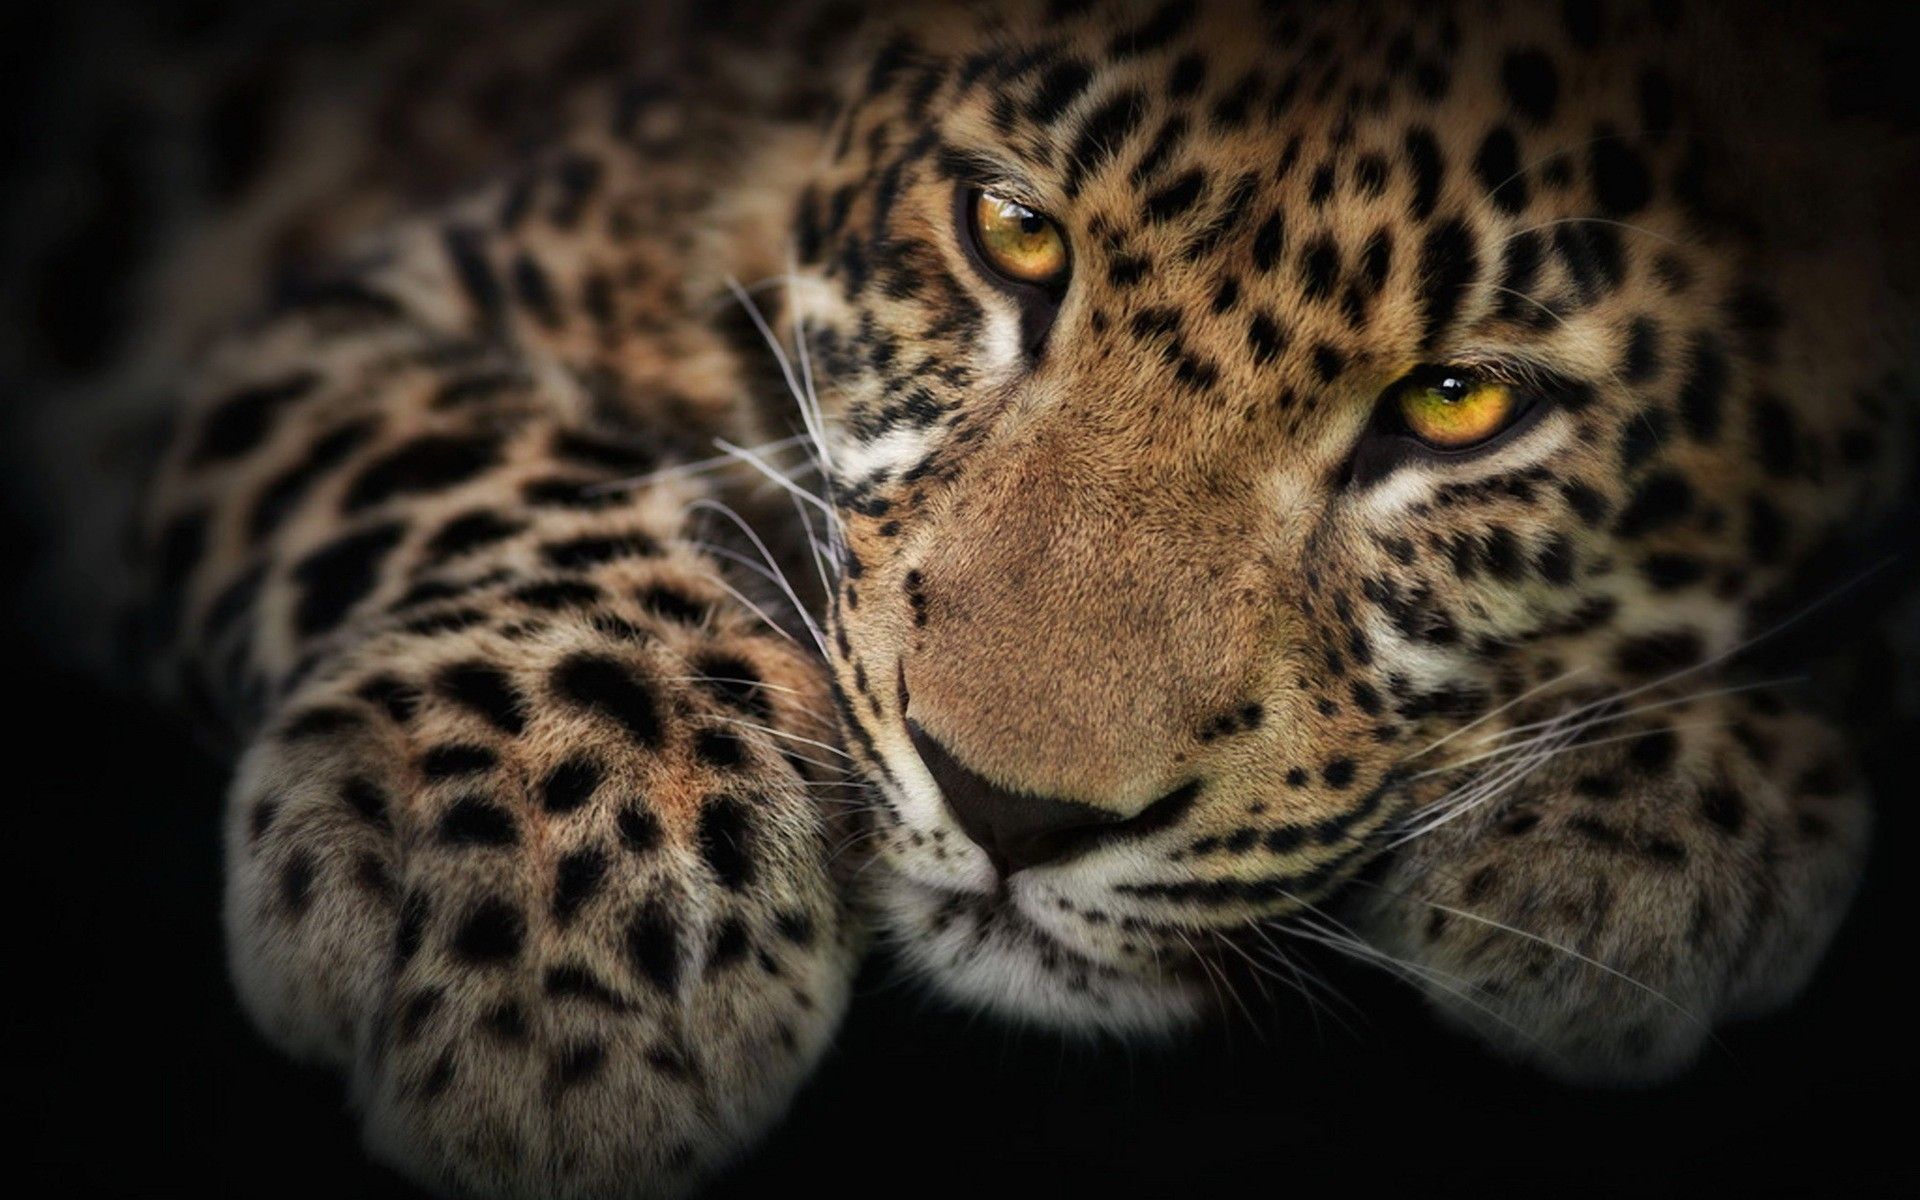 Fondos de leopardo para fondos de escritorio HD fondo de pantalla gratis